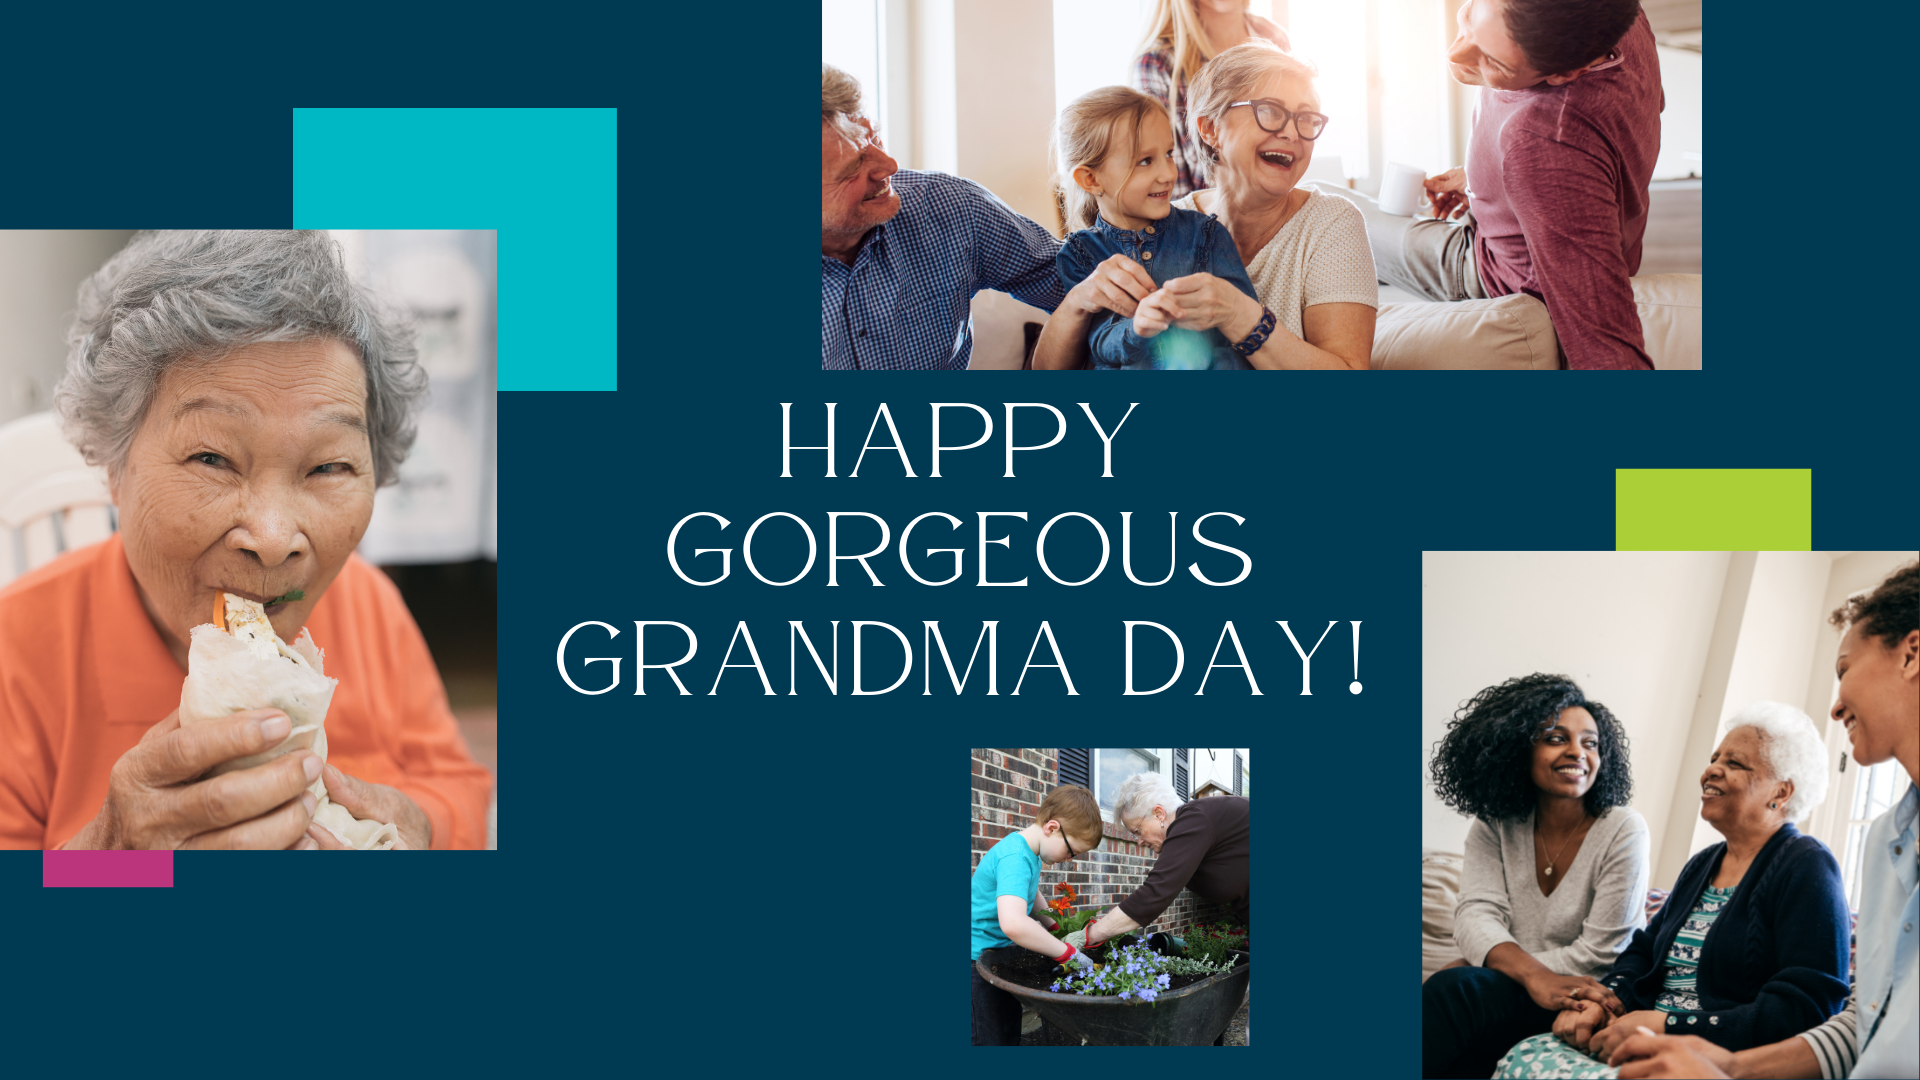 Hey, Grandma! You’re Gorgeous!